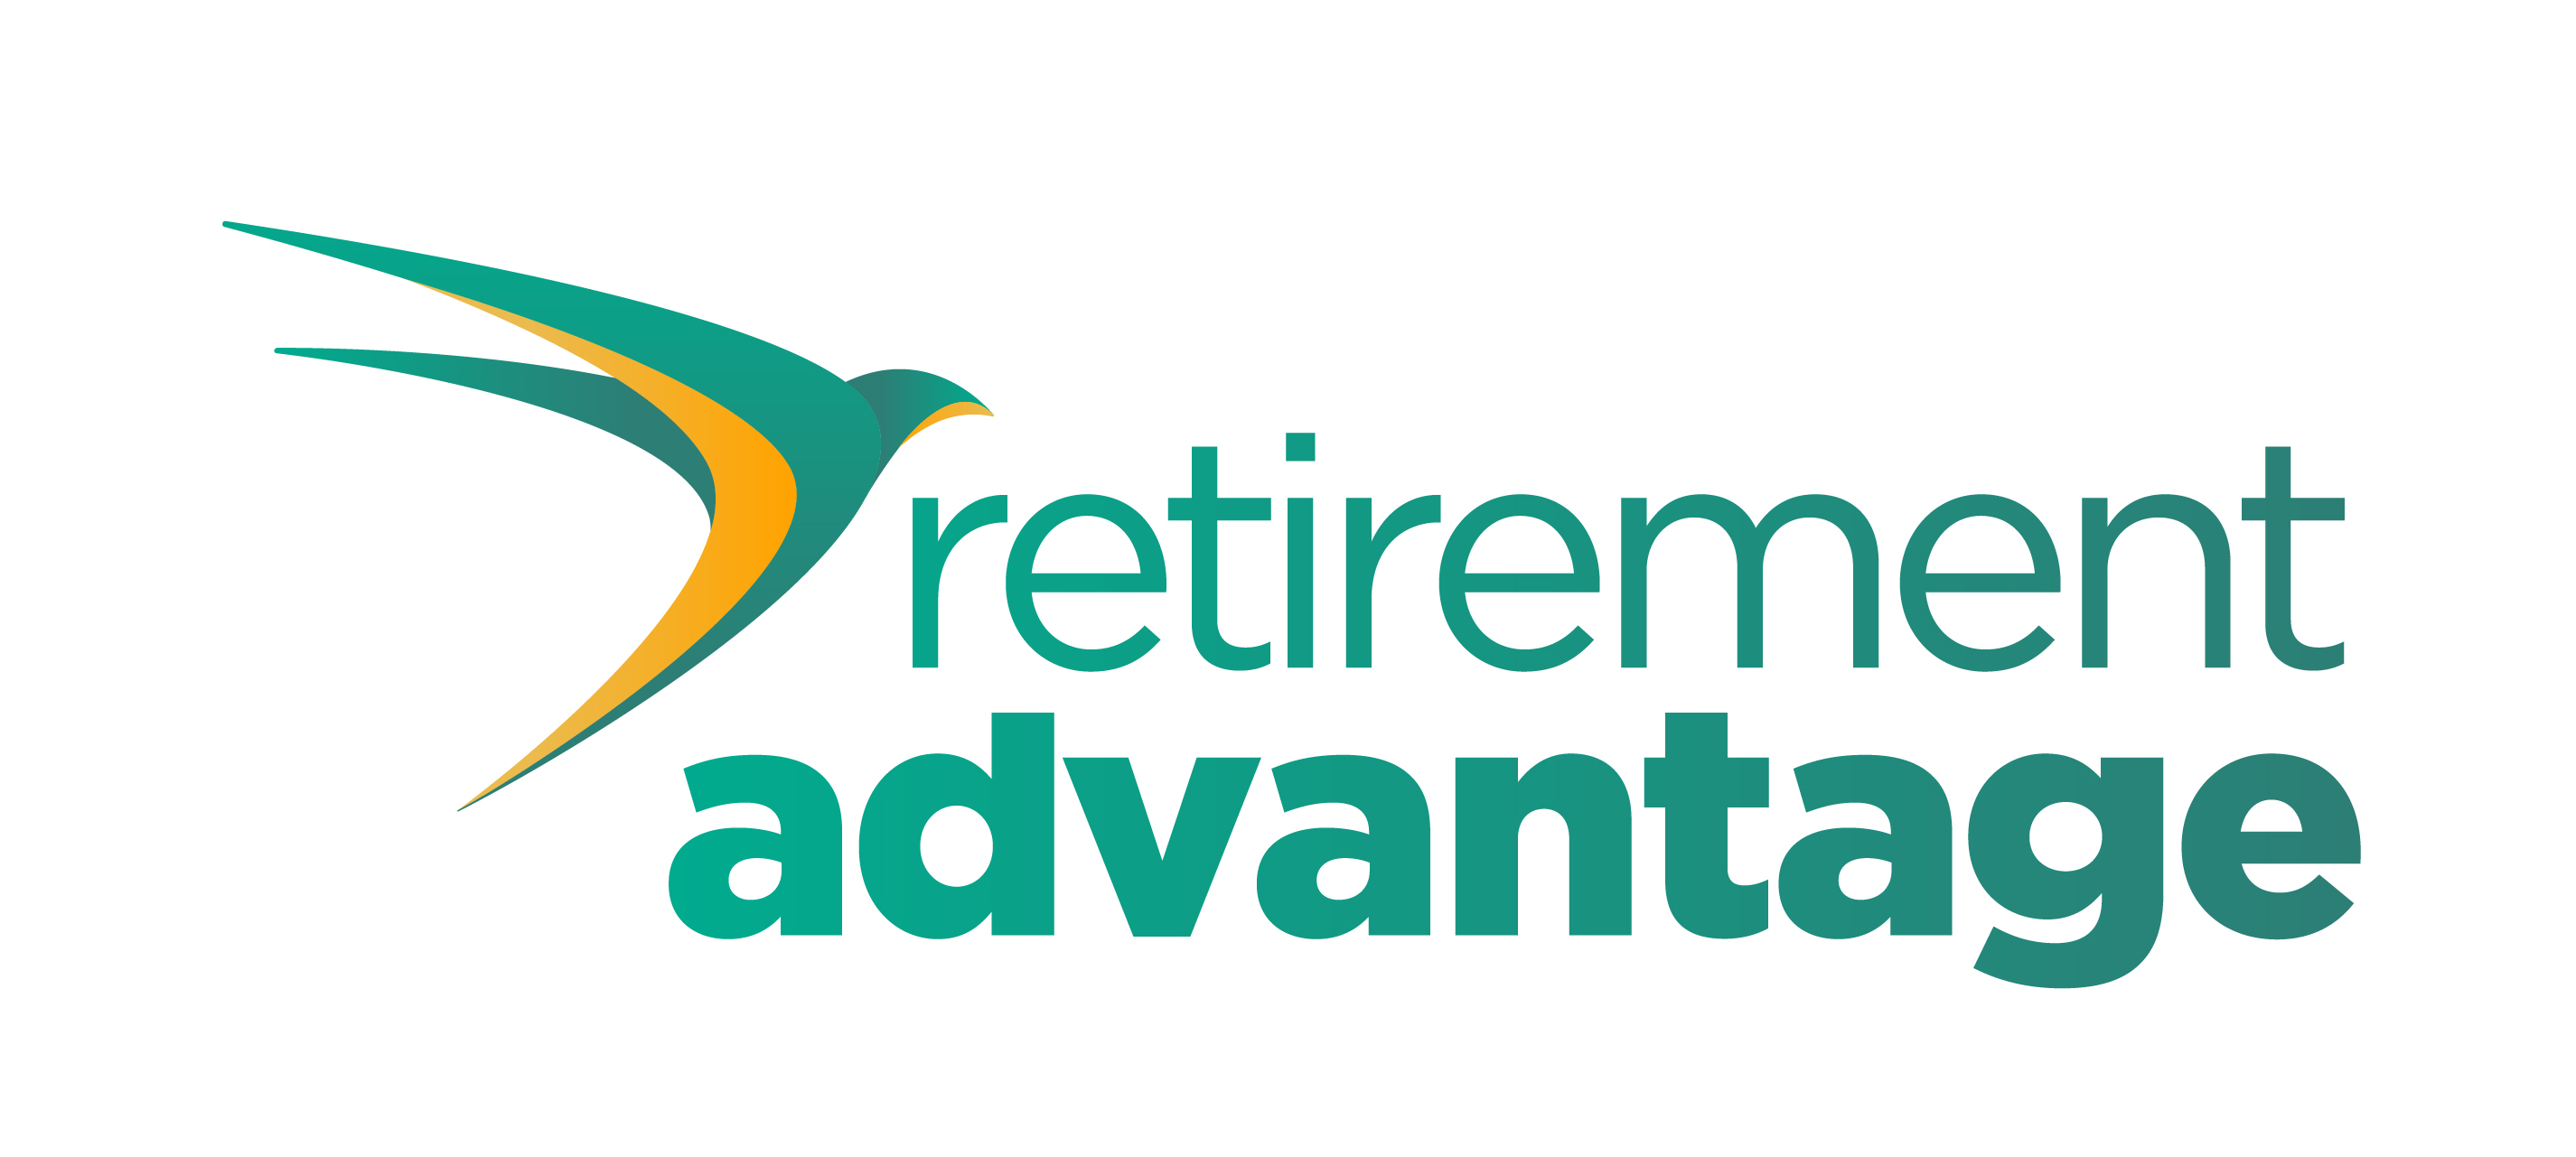 save on life - retirement advantage 